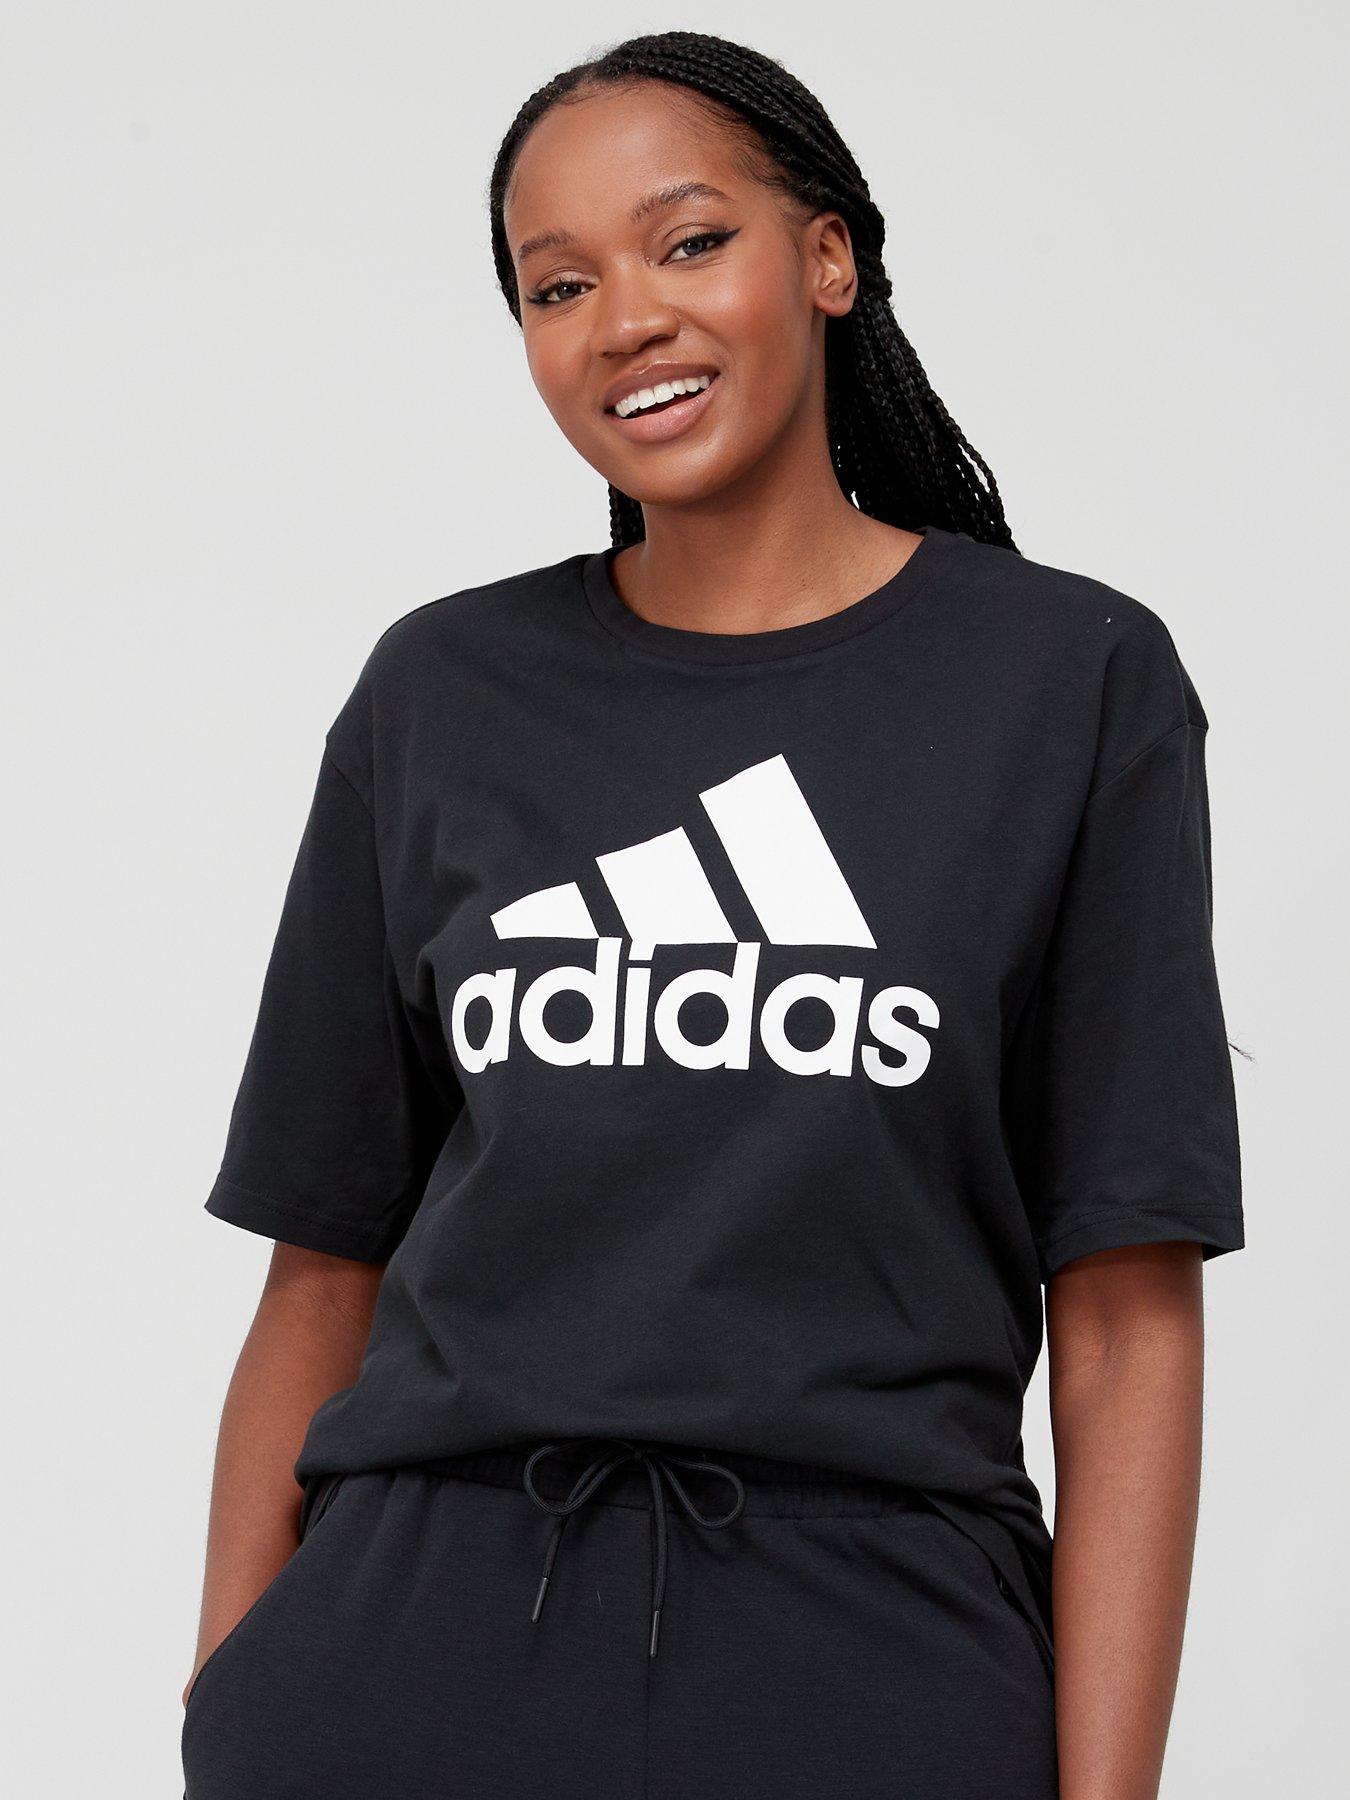 Adidas & t-shirts | | www.very.co.uk